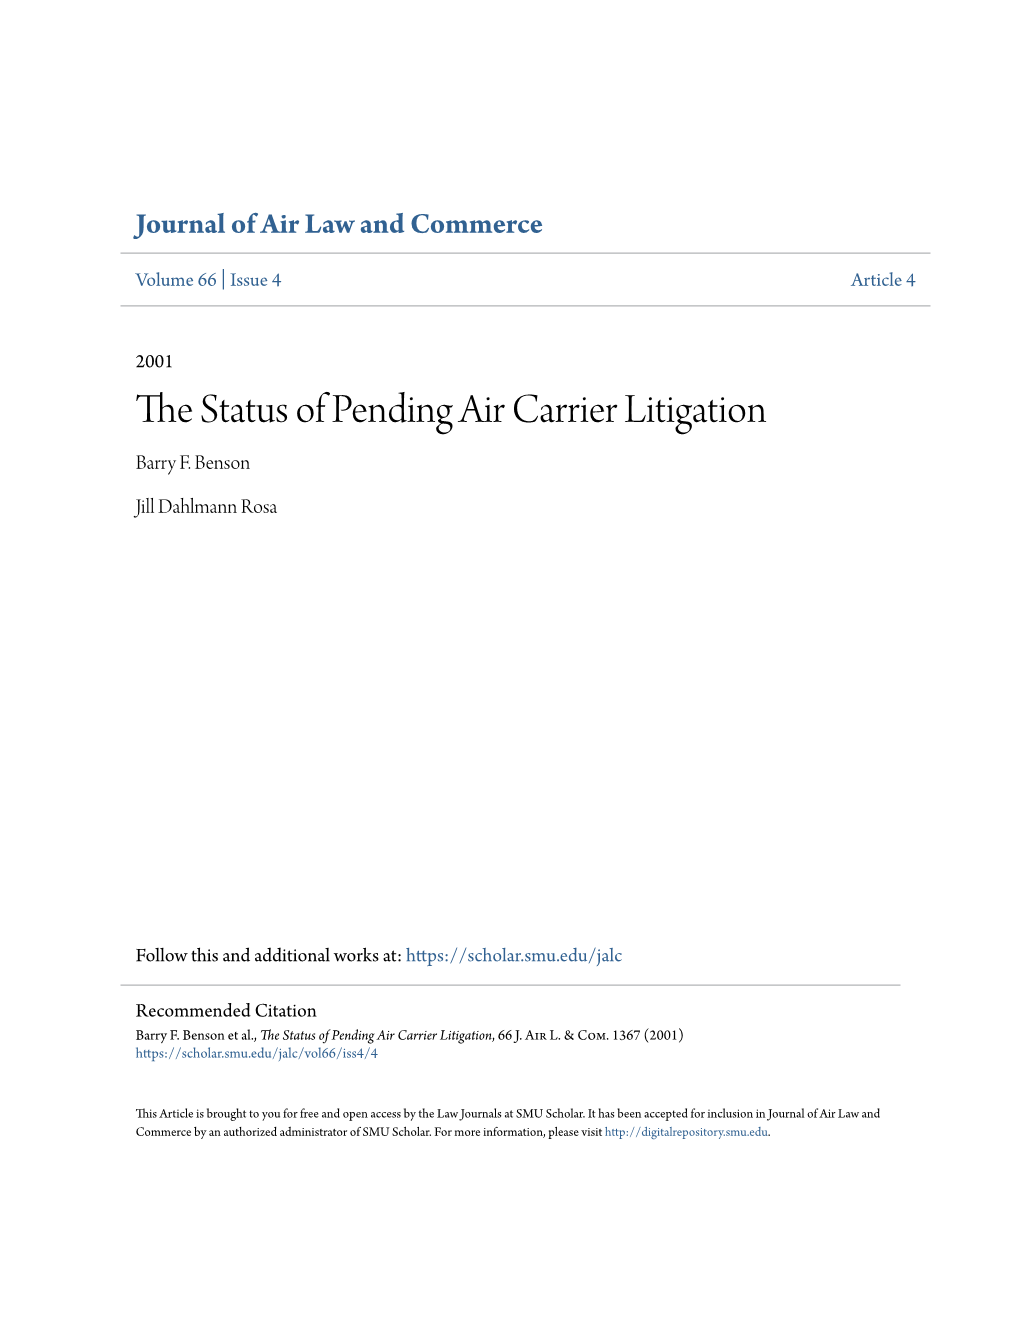 The Status of Pending Air Carrier Litigation, 66 J